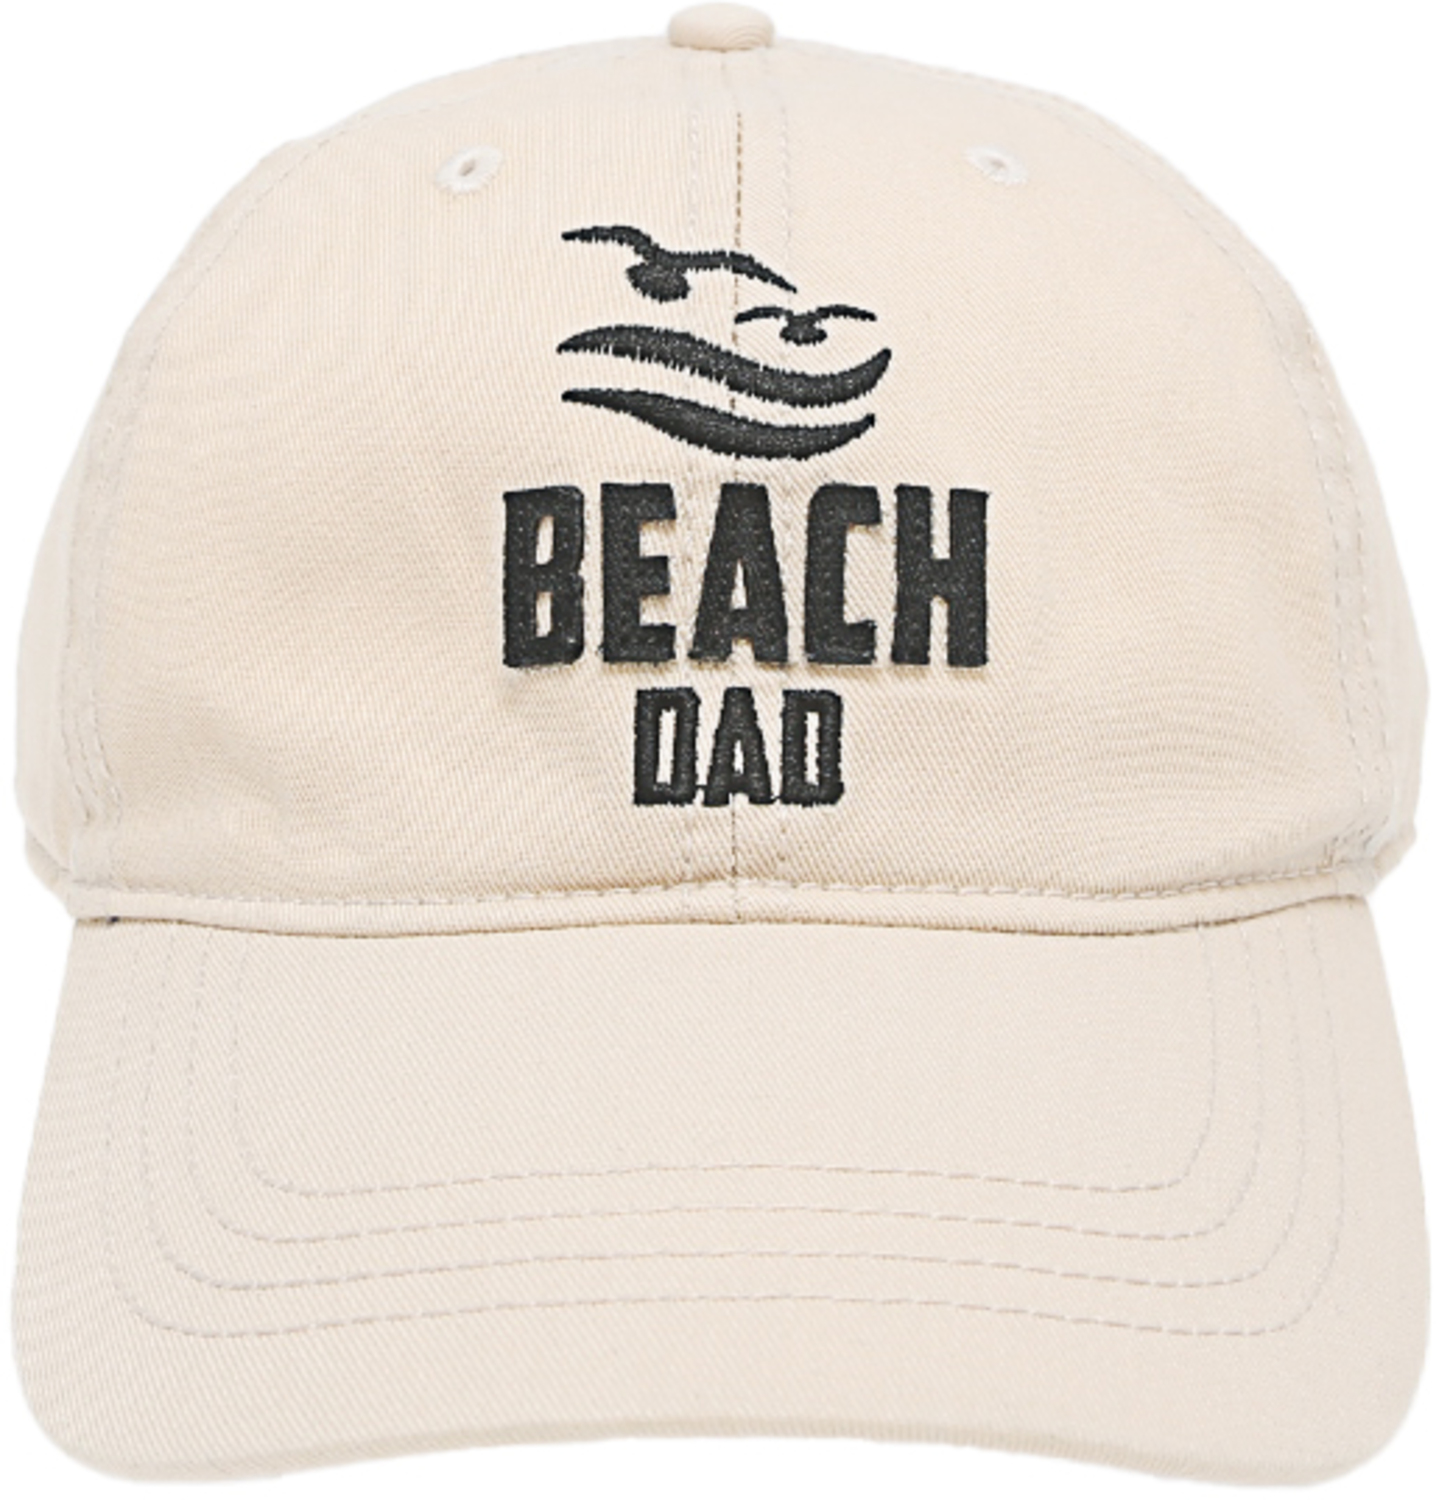 Beach Dad by Man Out - Beach Dad - Beige Adjustable Hat